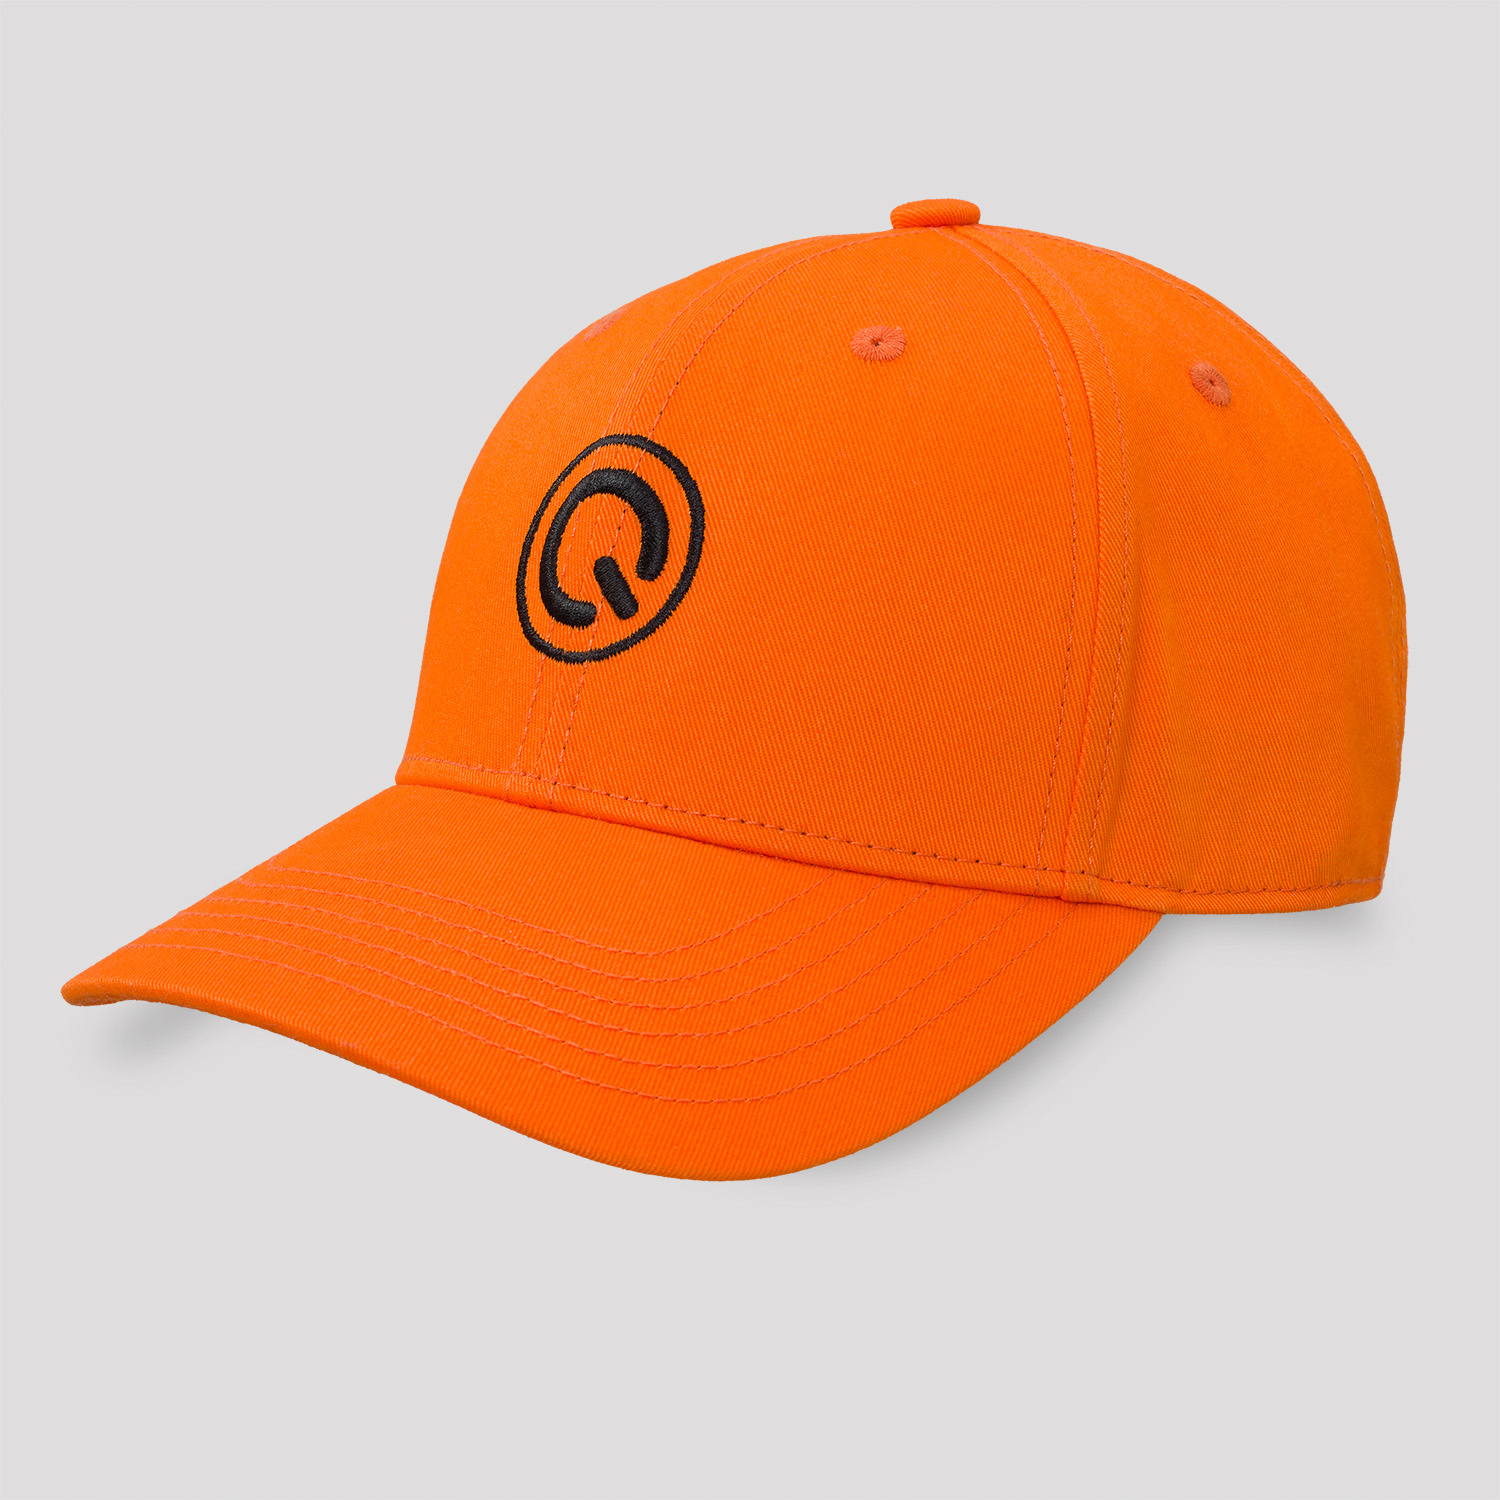 Q-dance baseball cap orange/black Q-dance